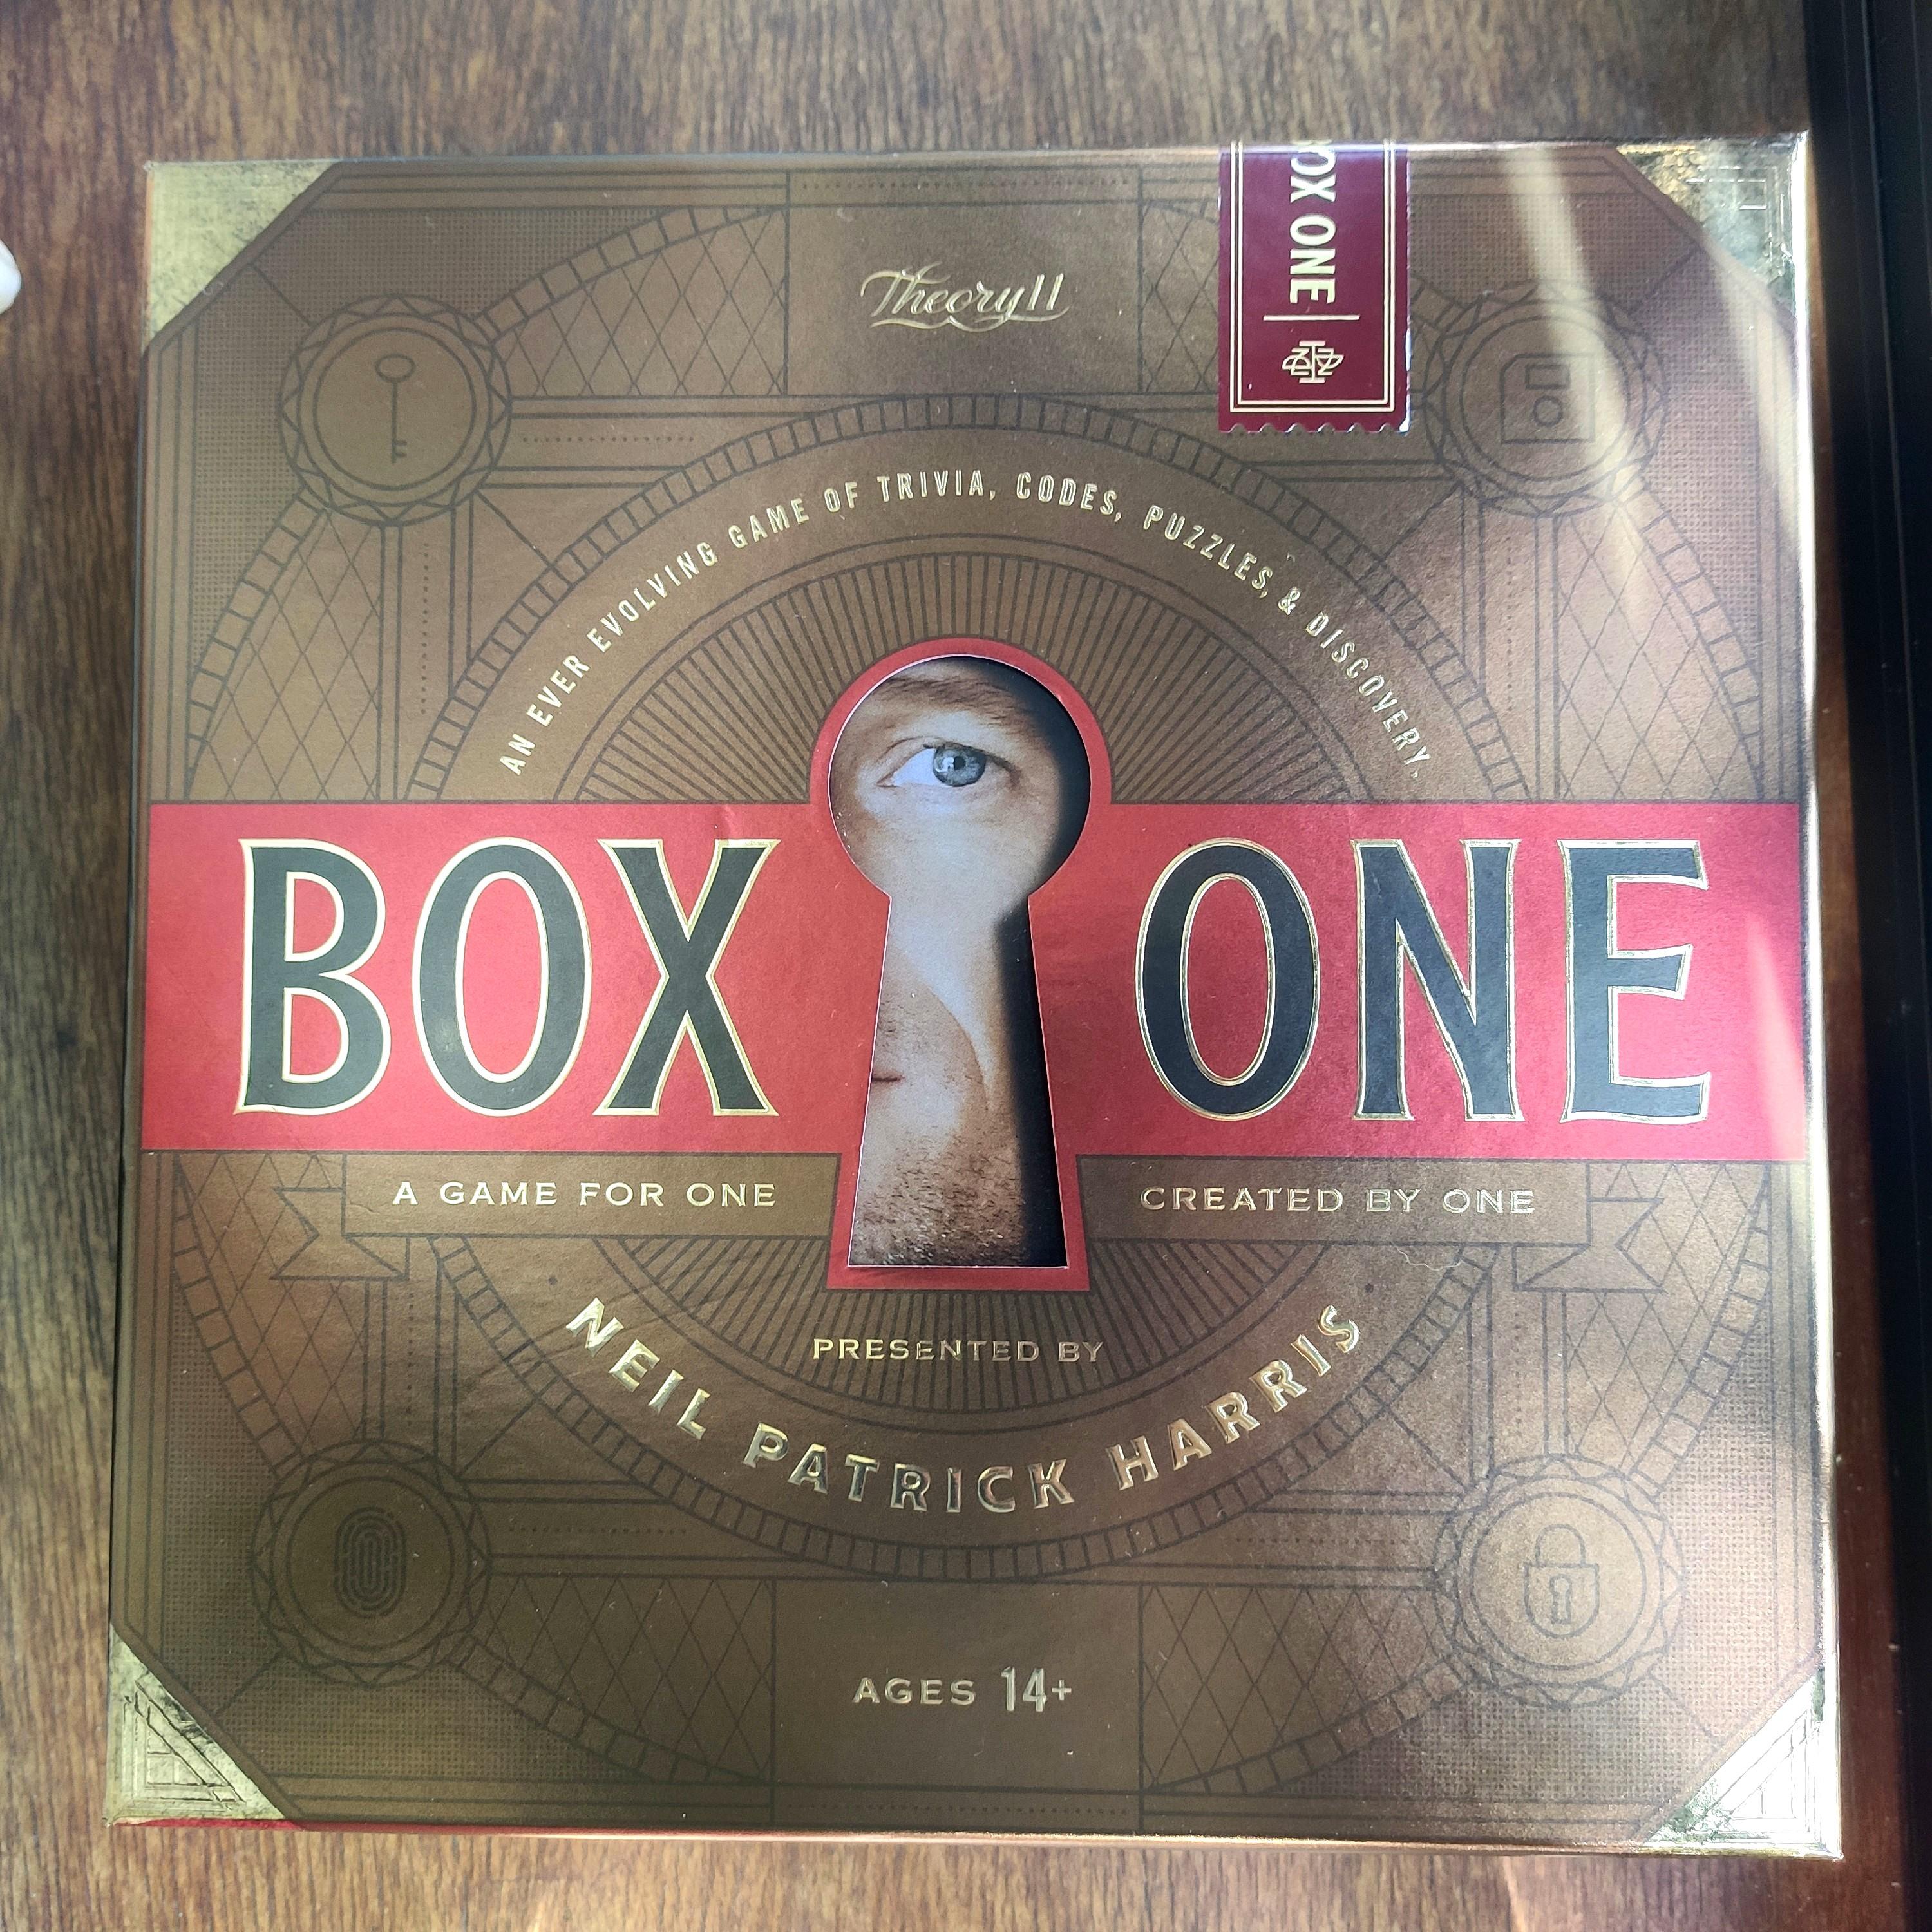 Box ONE by Neil Patrick Harris